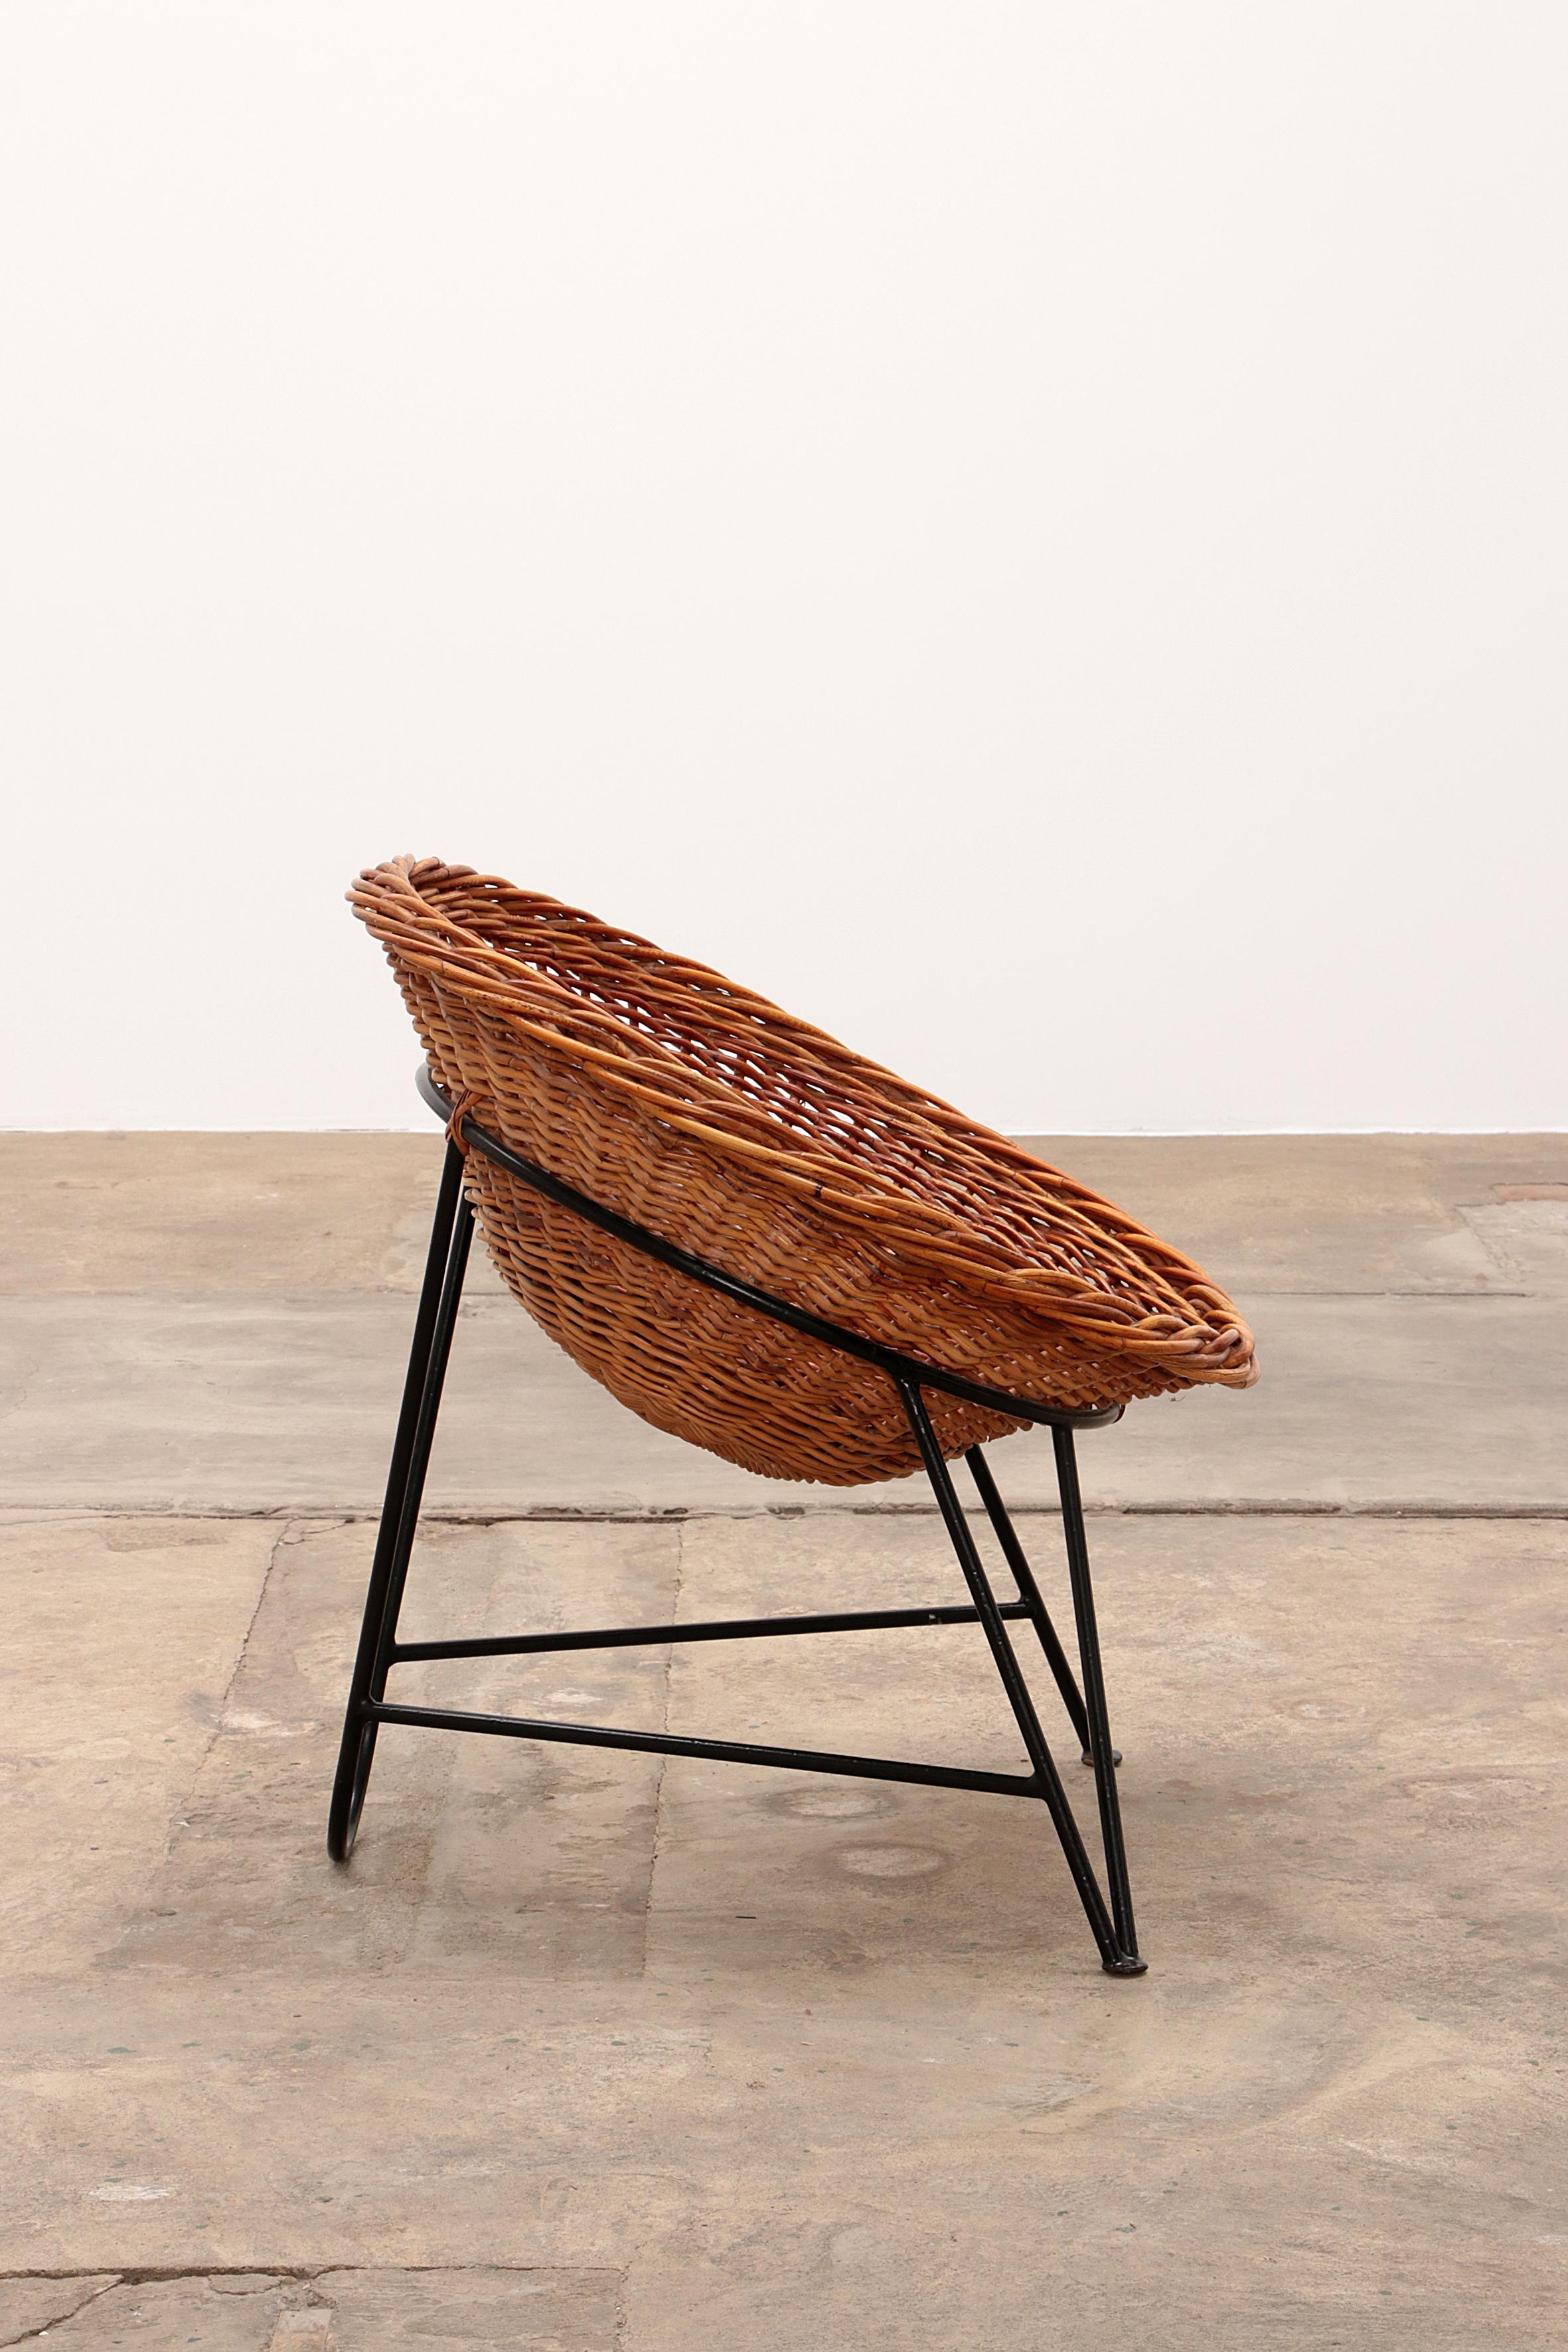 Mid-20th Century Mathieu Matégot Wicker Chair 1950s For Sale